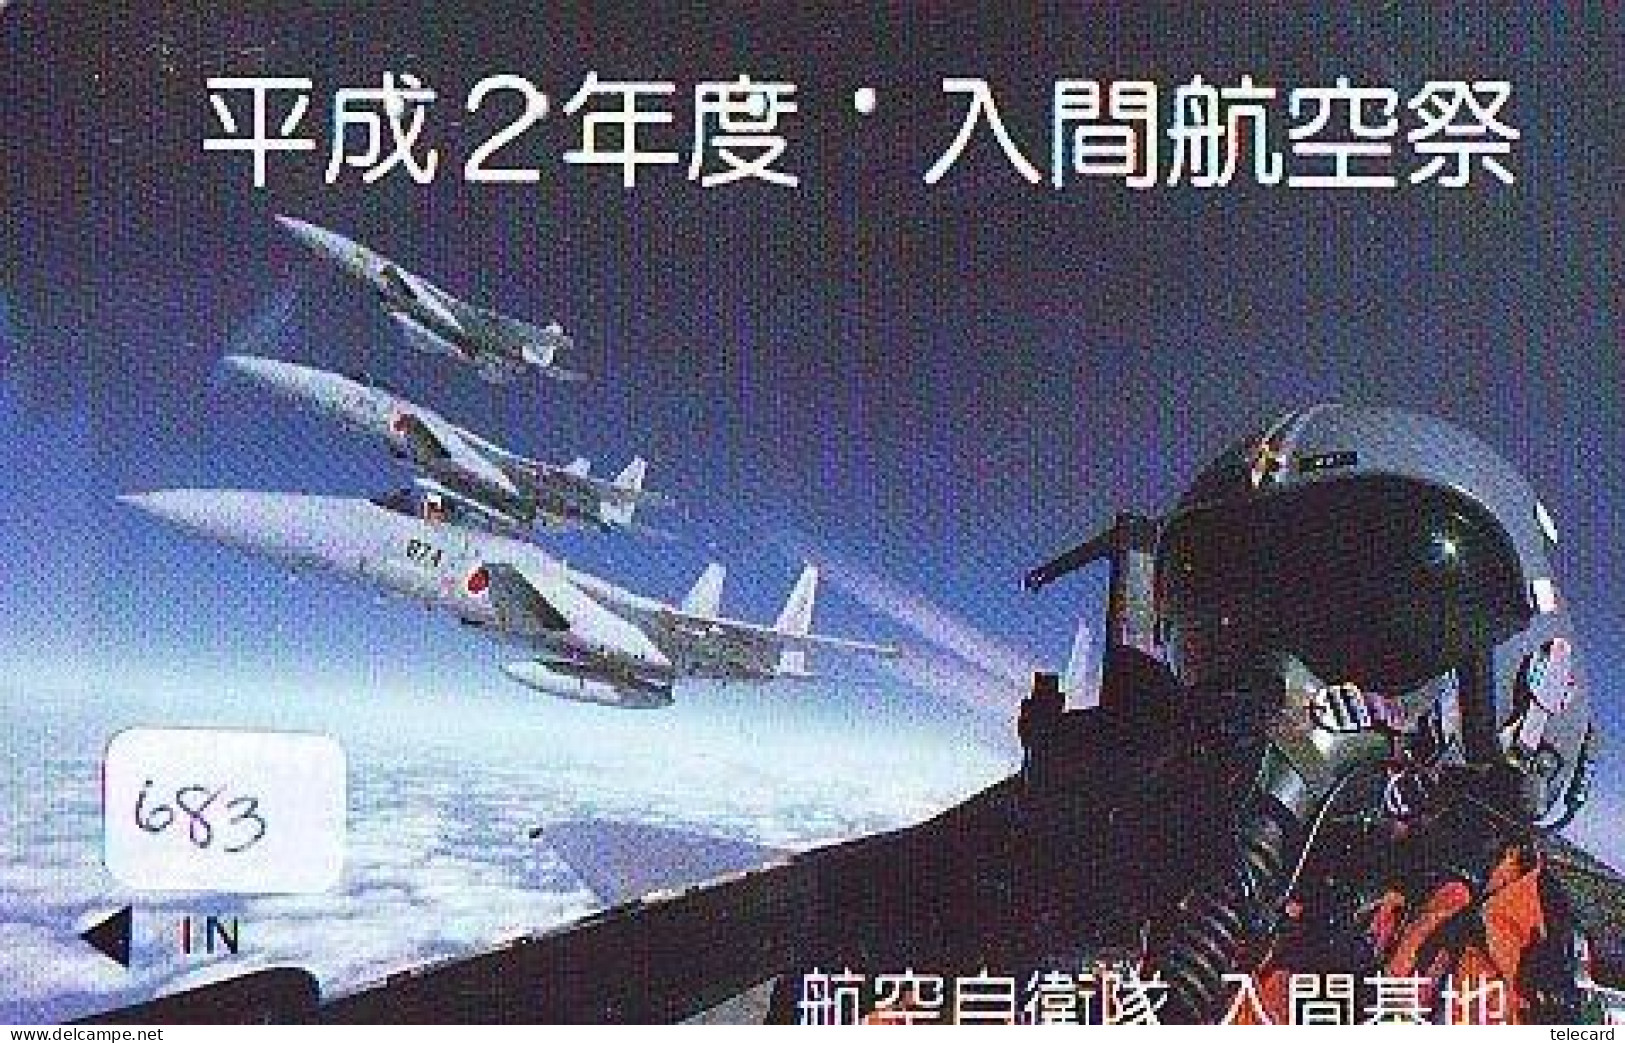 TELECARTE JAPON * MILITAIRY AVION  (683)  Flugzeuge * Airplane * Aeroplano * PHONECARD JAPAN * ARMEE * LEGER VLIEGTUIG - Armee